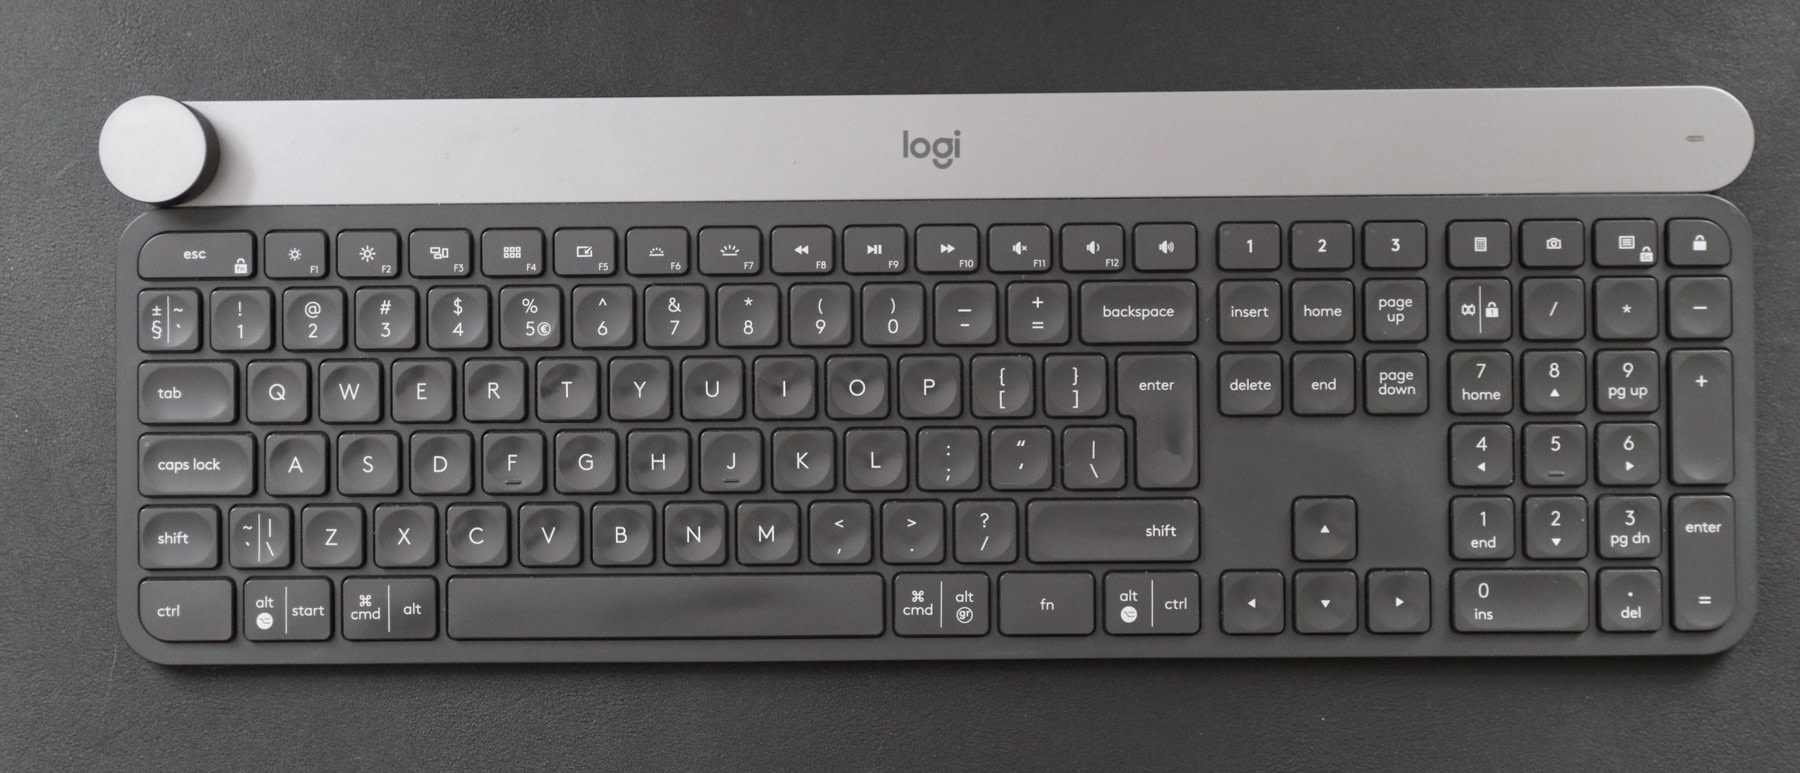 language keyboards for macbook pro